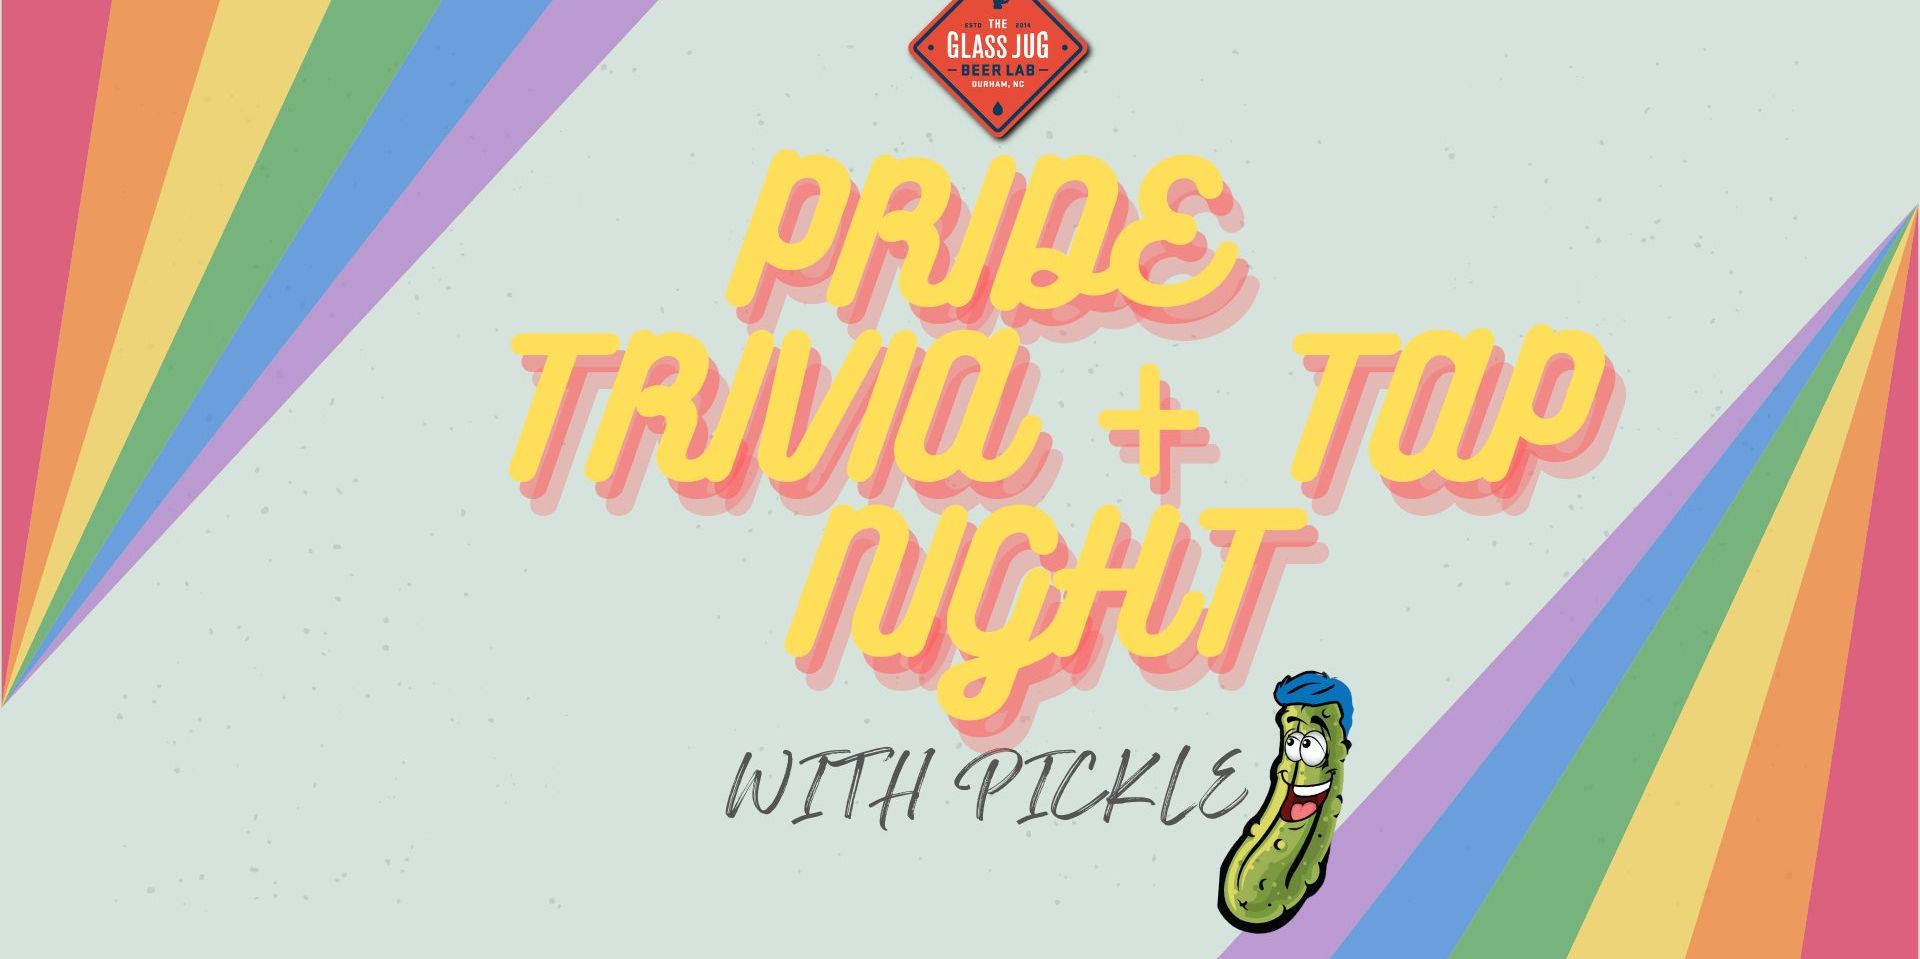 PRIDE Trivia + Tap Night promotional image